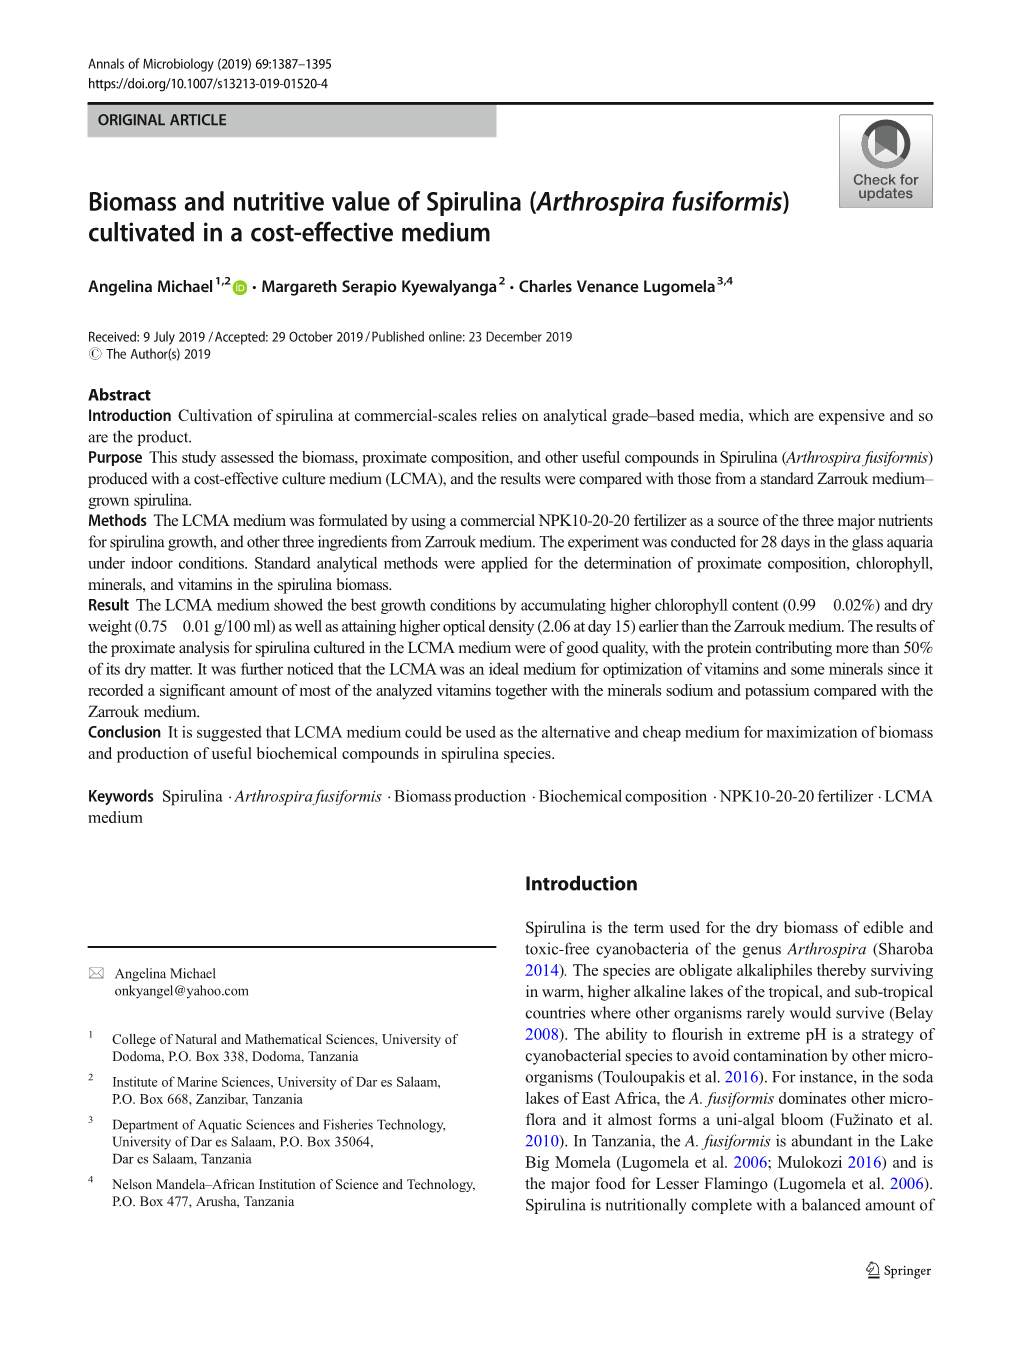 Biomass and Nutritive Value of Spirulina (Arthrospira Fusiformis) Cultivated in a Cost-Effective Medium